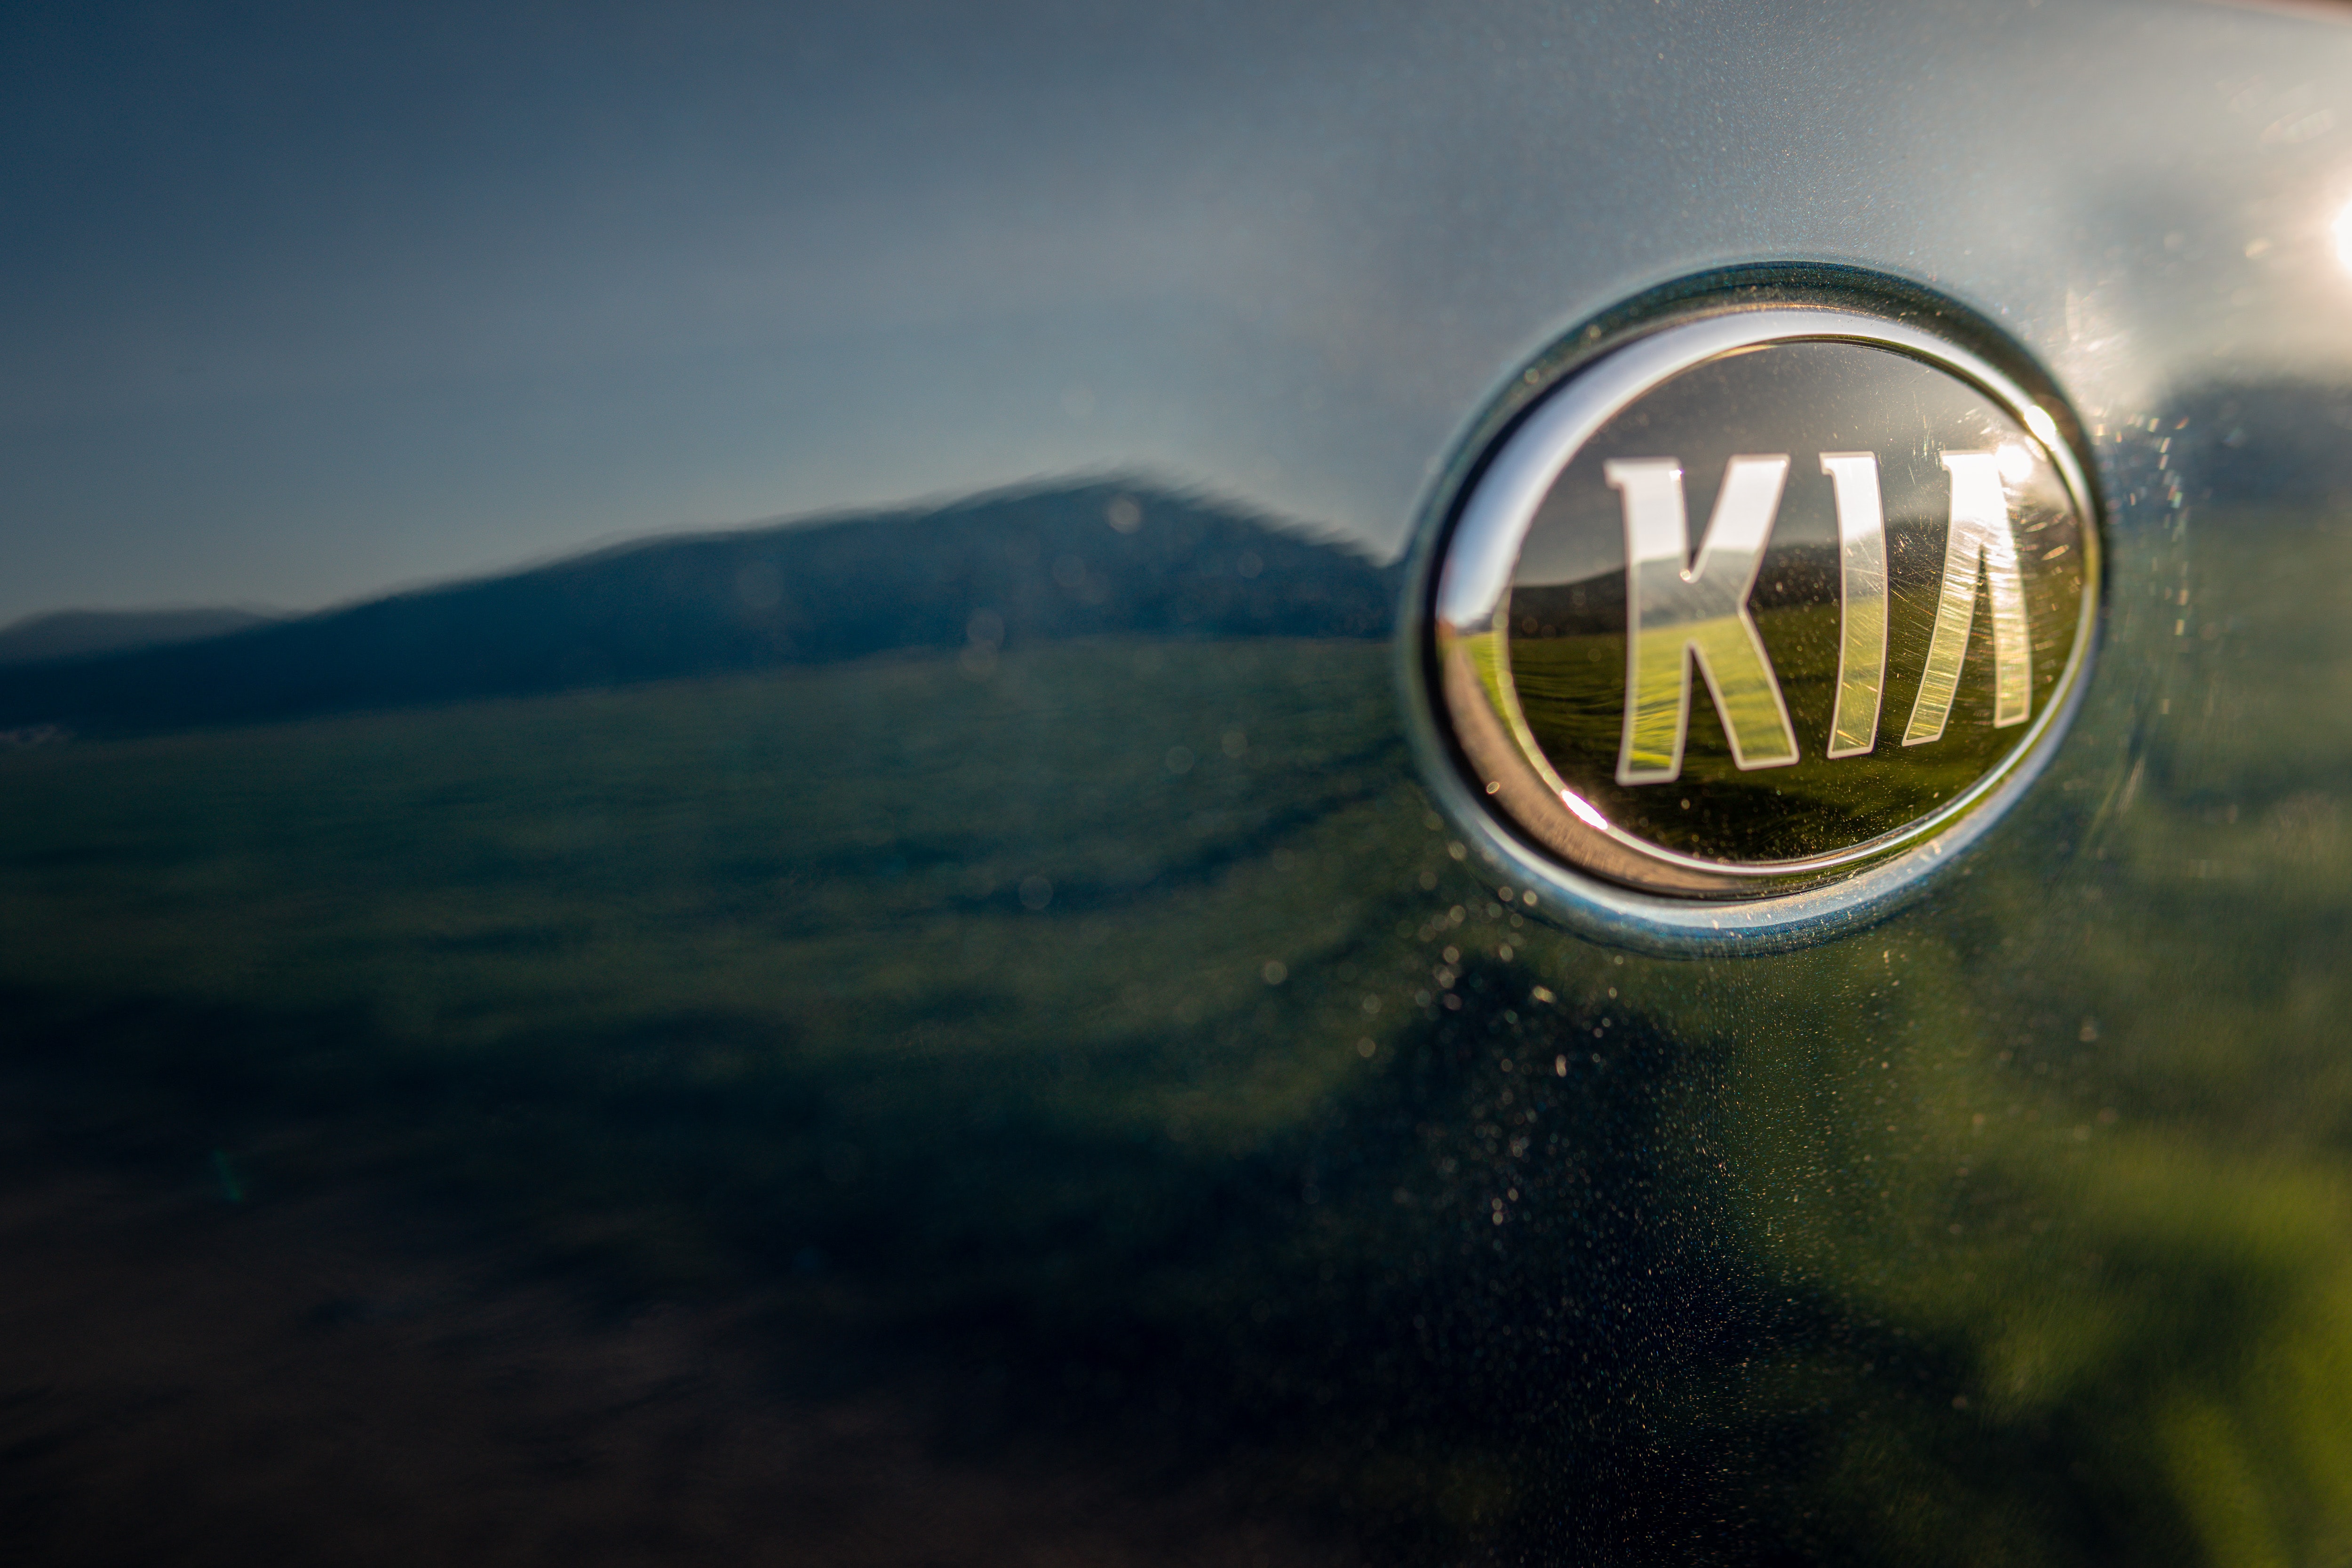 kia vehicle logo